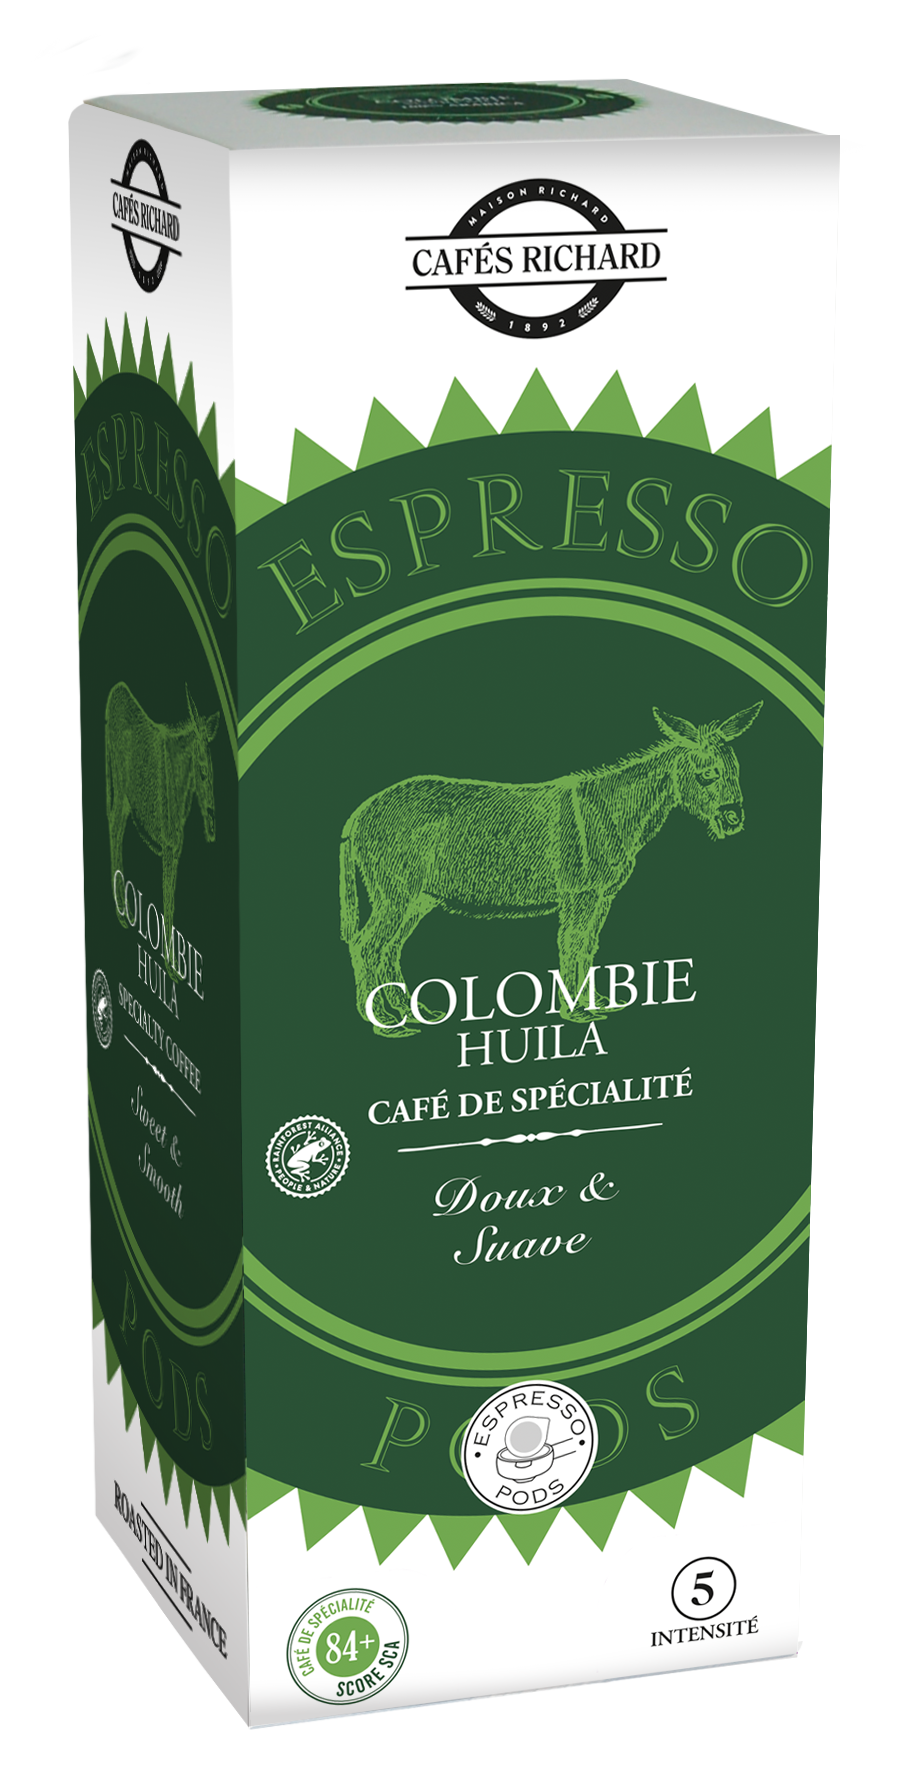 Cafes Richard Espresso Pods Colombie Excelso (Carton* 25 Pods)